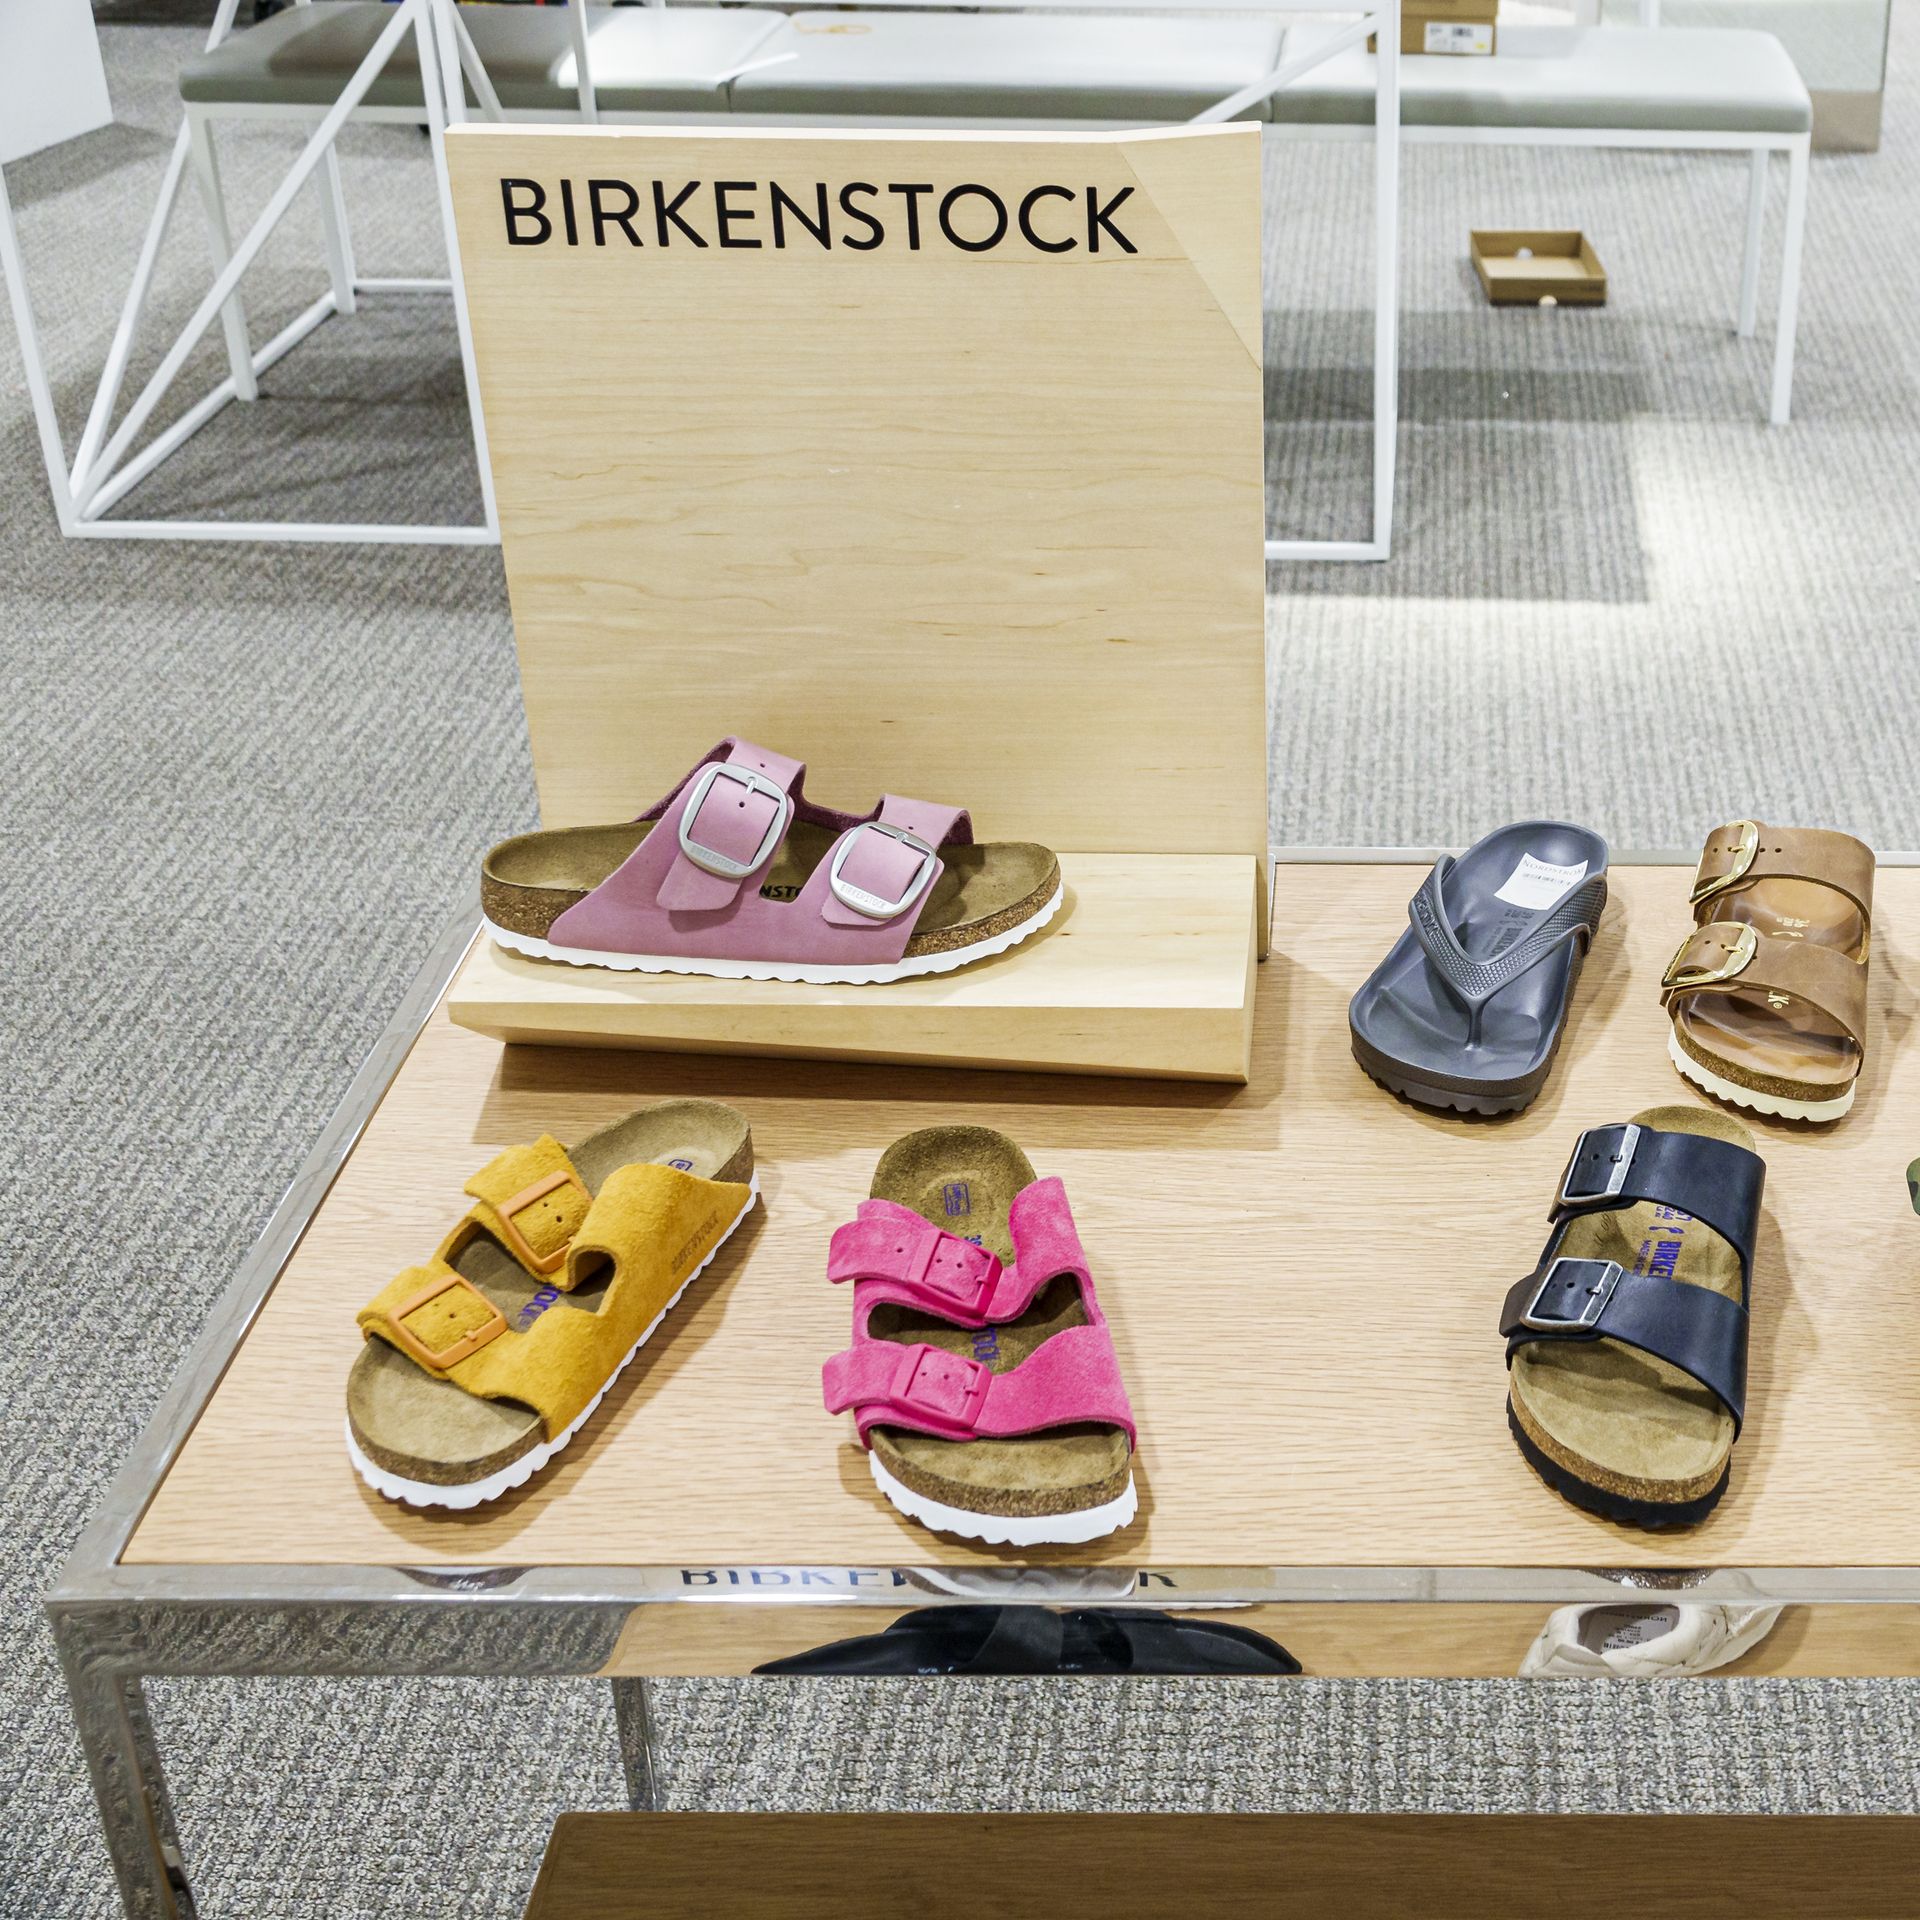 Where to buy Birkenstock? - Graduate Store